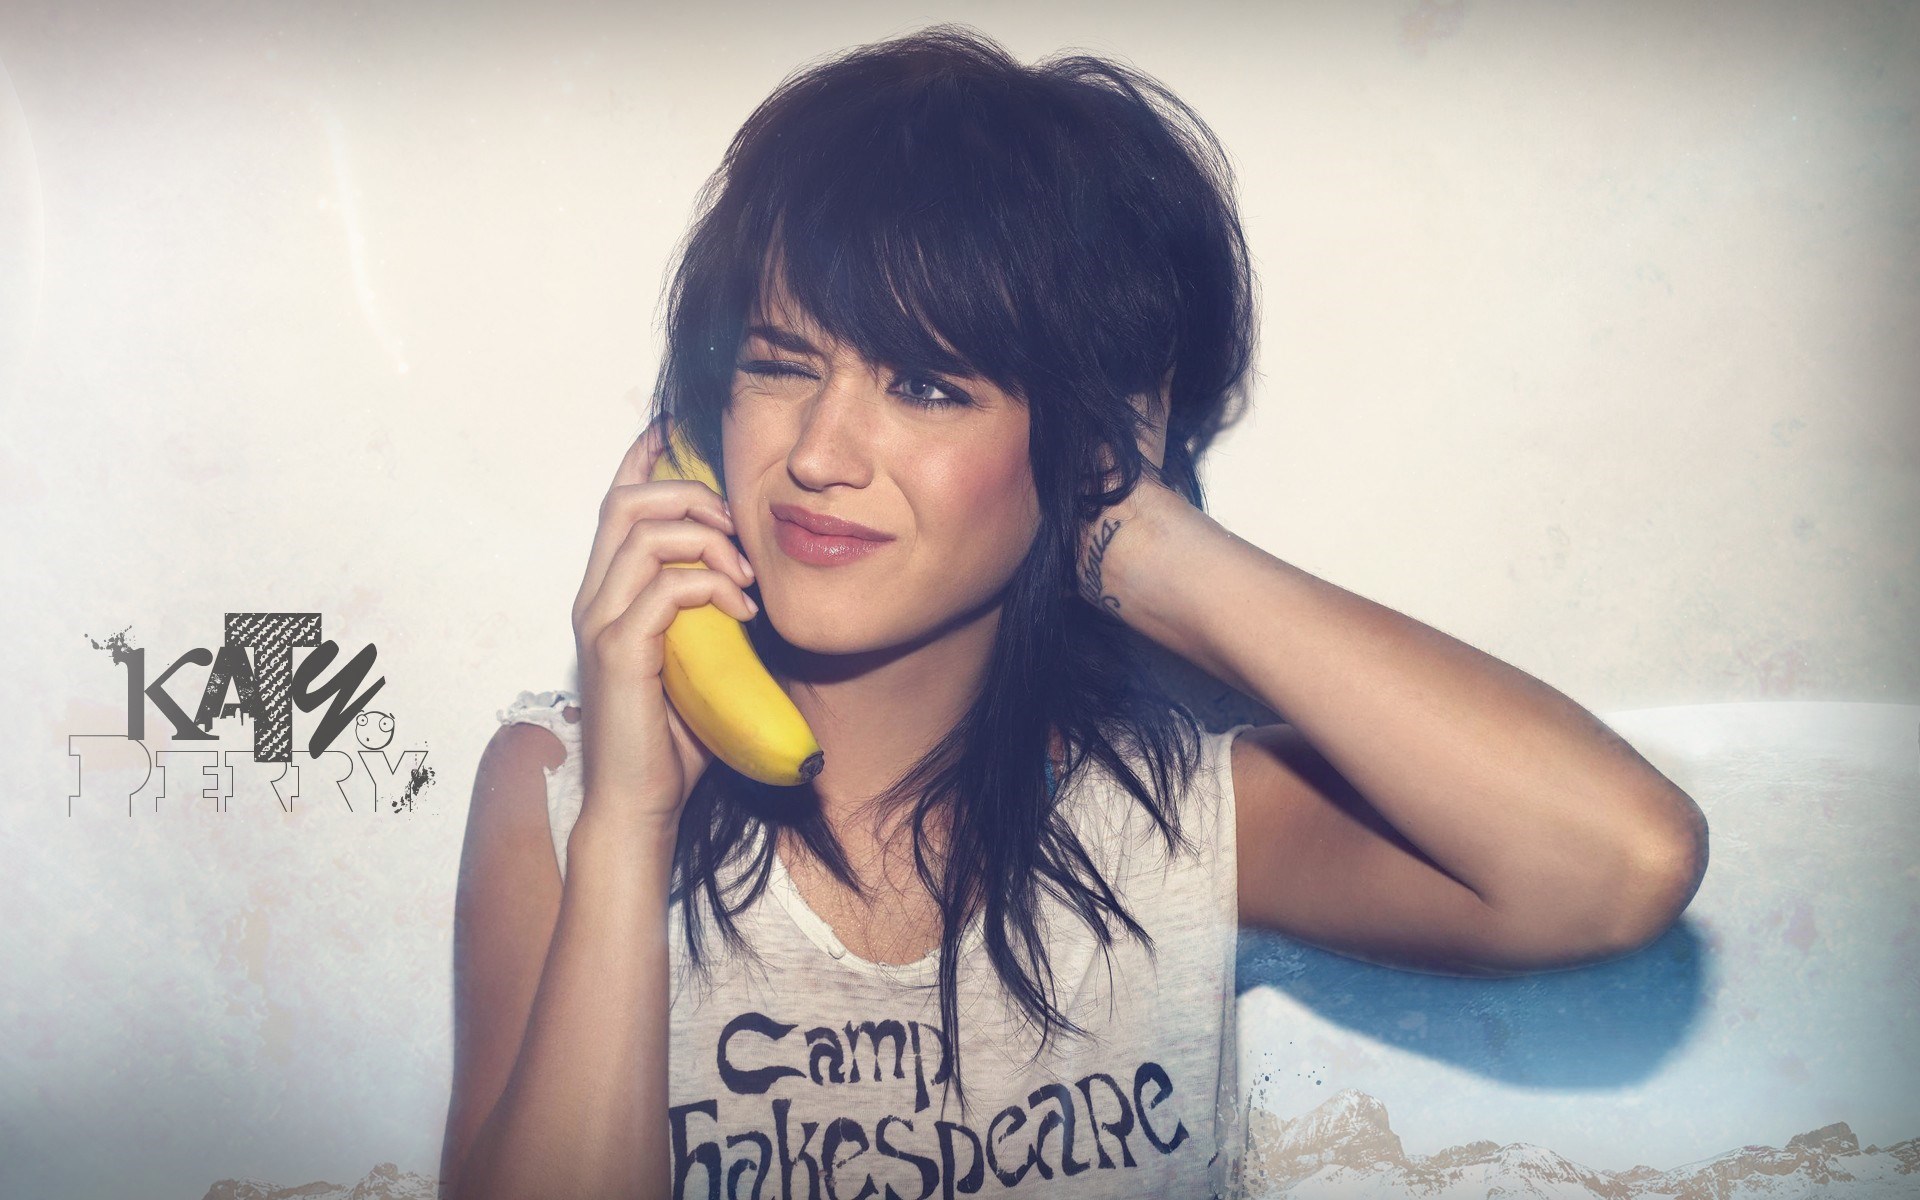 Katy Perry Wallpaper banana phone